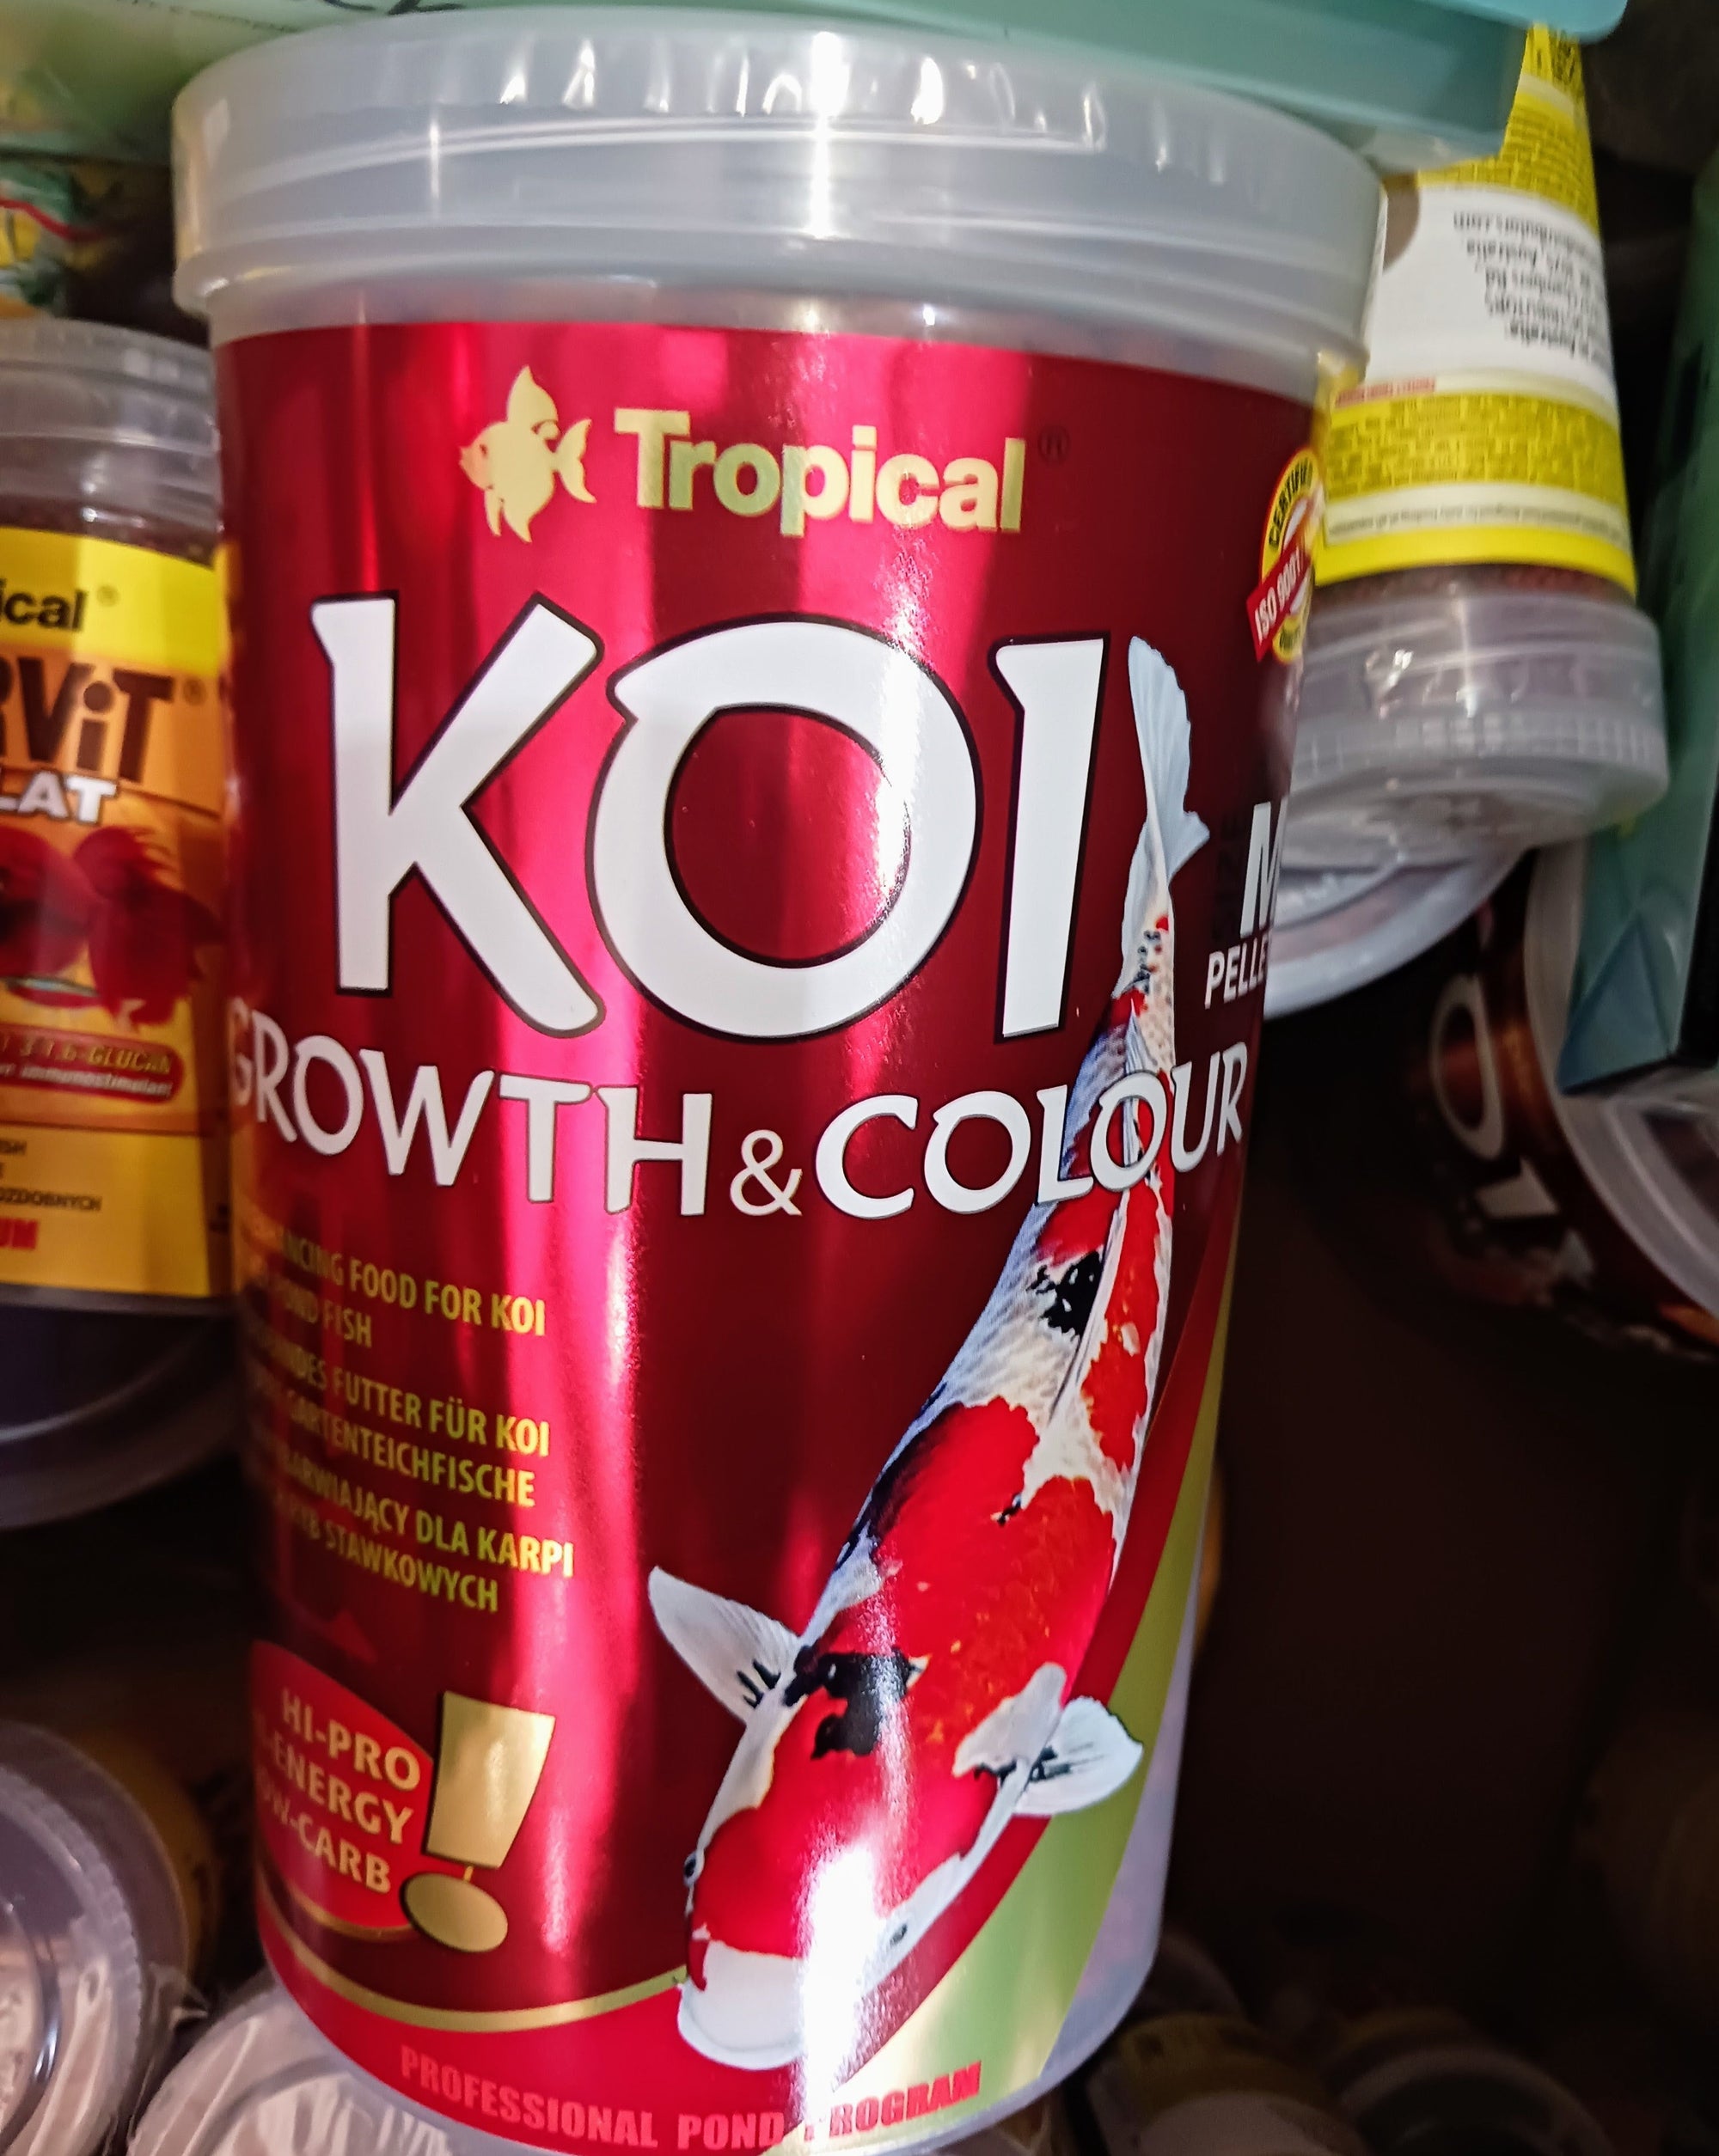 Koi Fish Growth & Colour - Medium Size Pellets - 350g